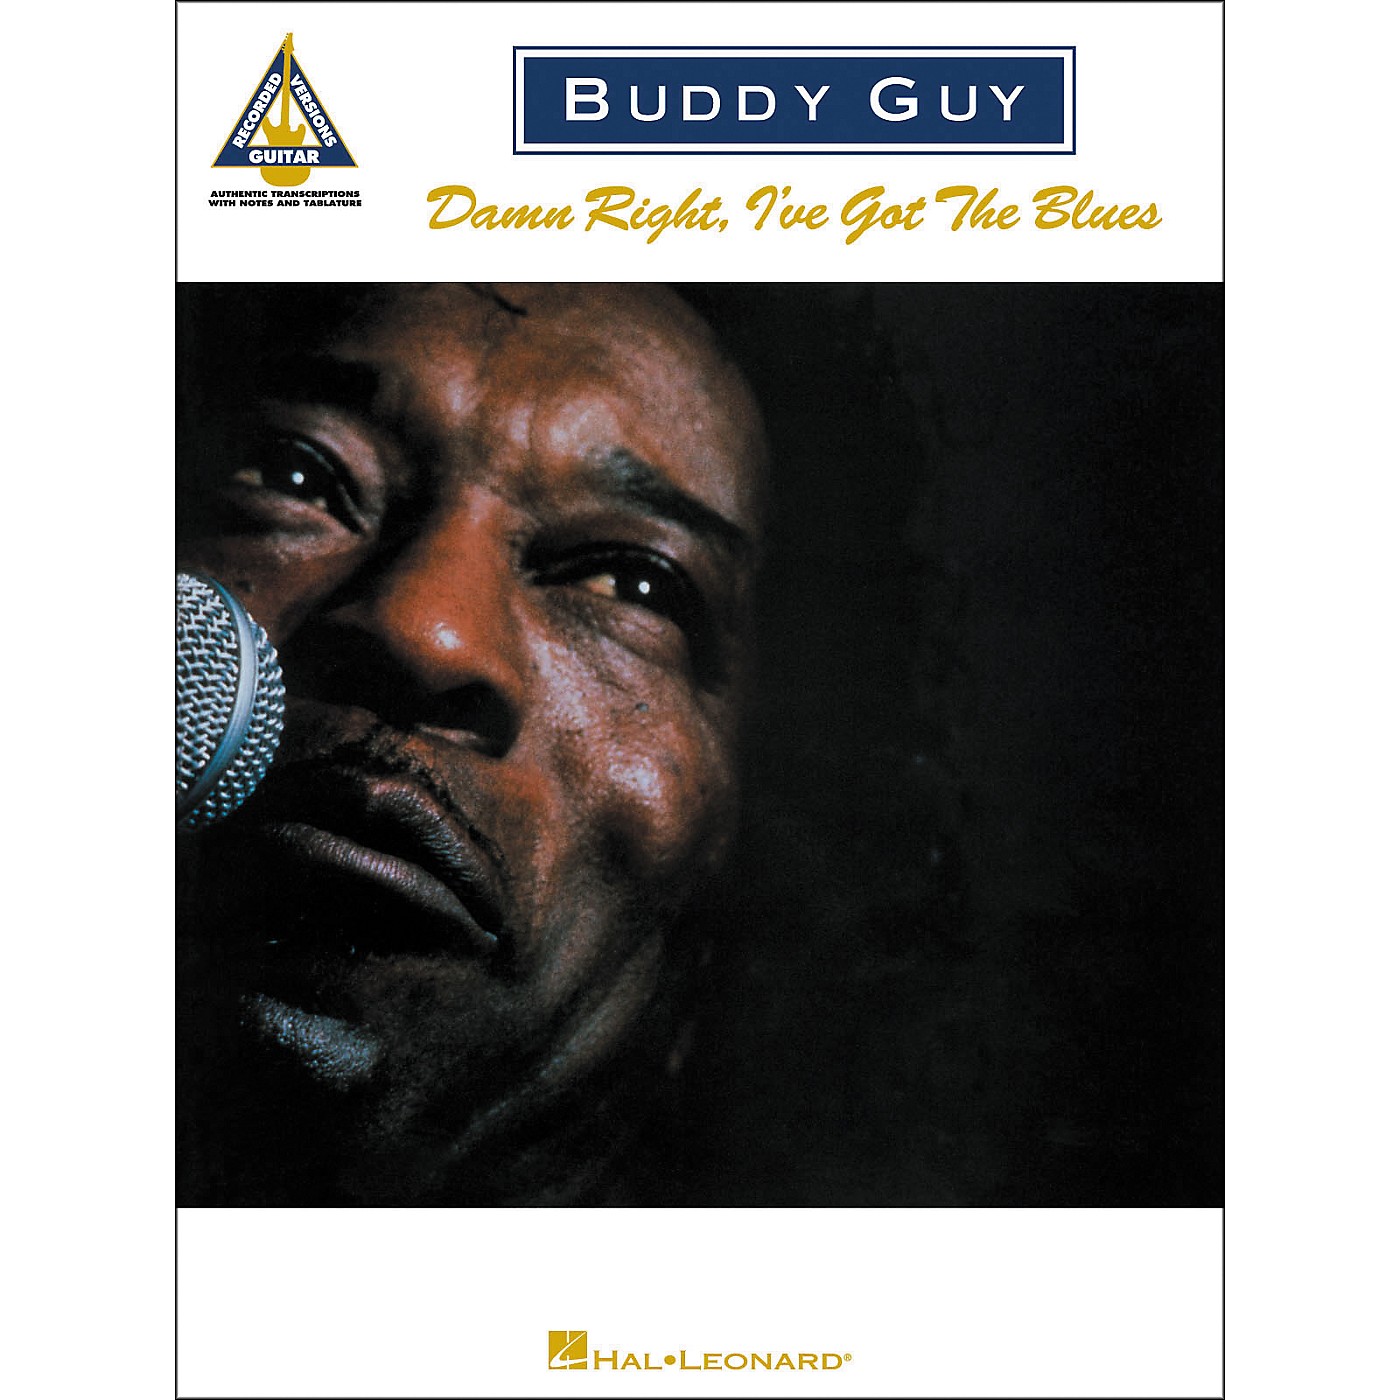 Hal Leonard Buddy Guy - Damn Right, I've Got the Blues Guitar Tab Songbook thumbnail